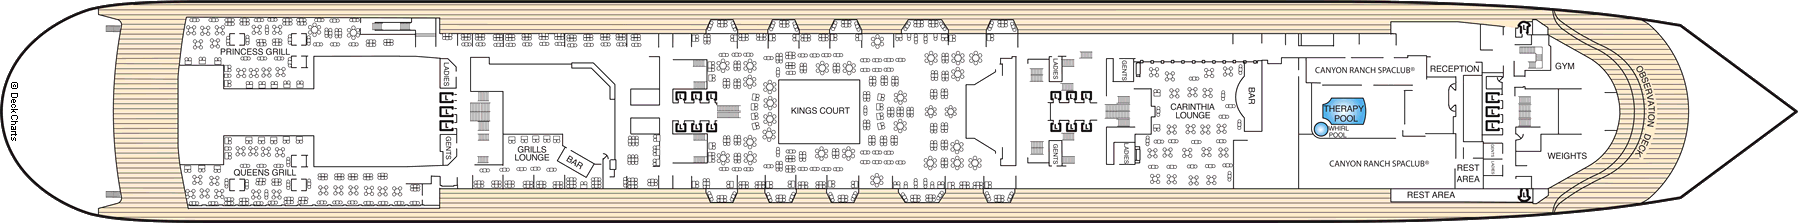 Планы палуб Queen Mary 2: Палуба 7